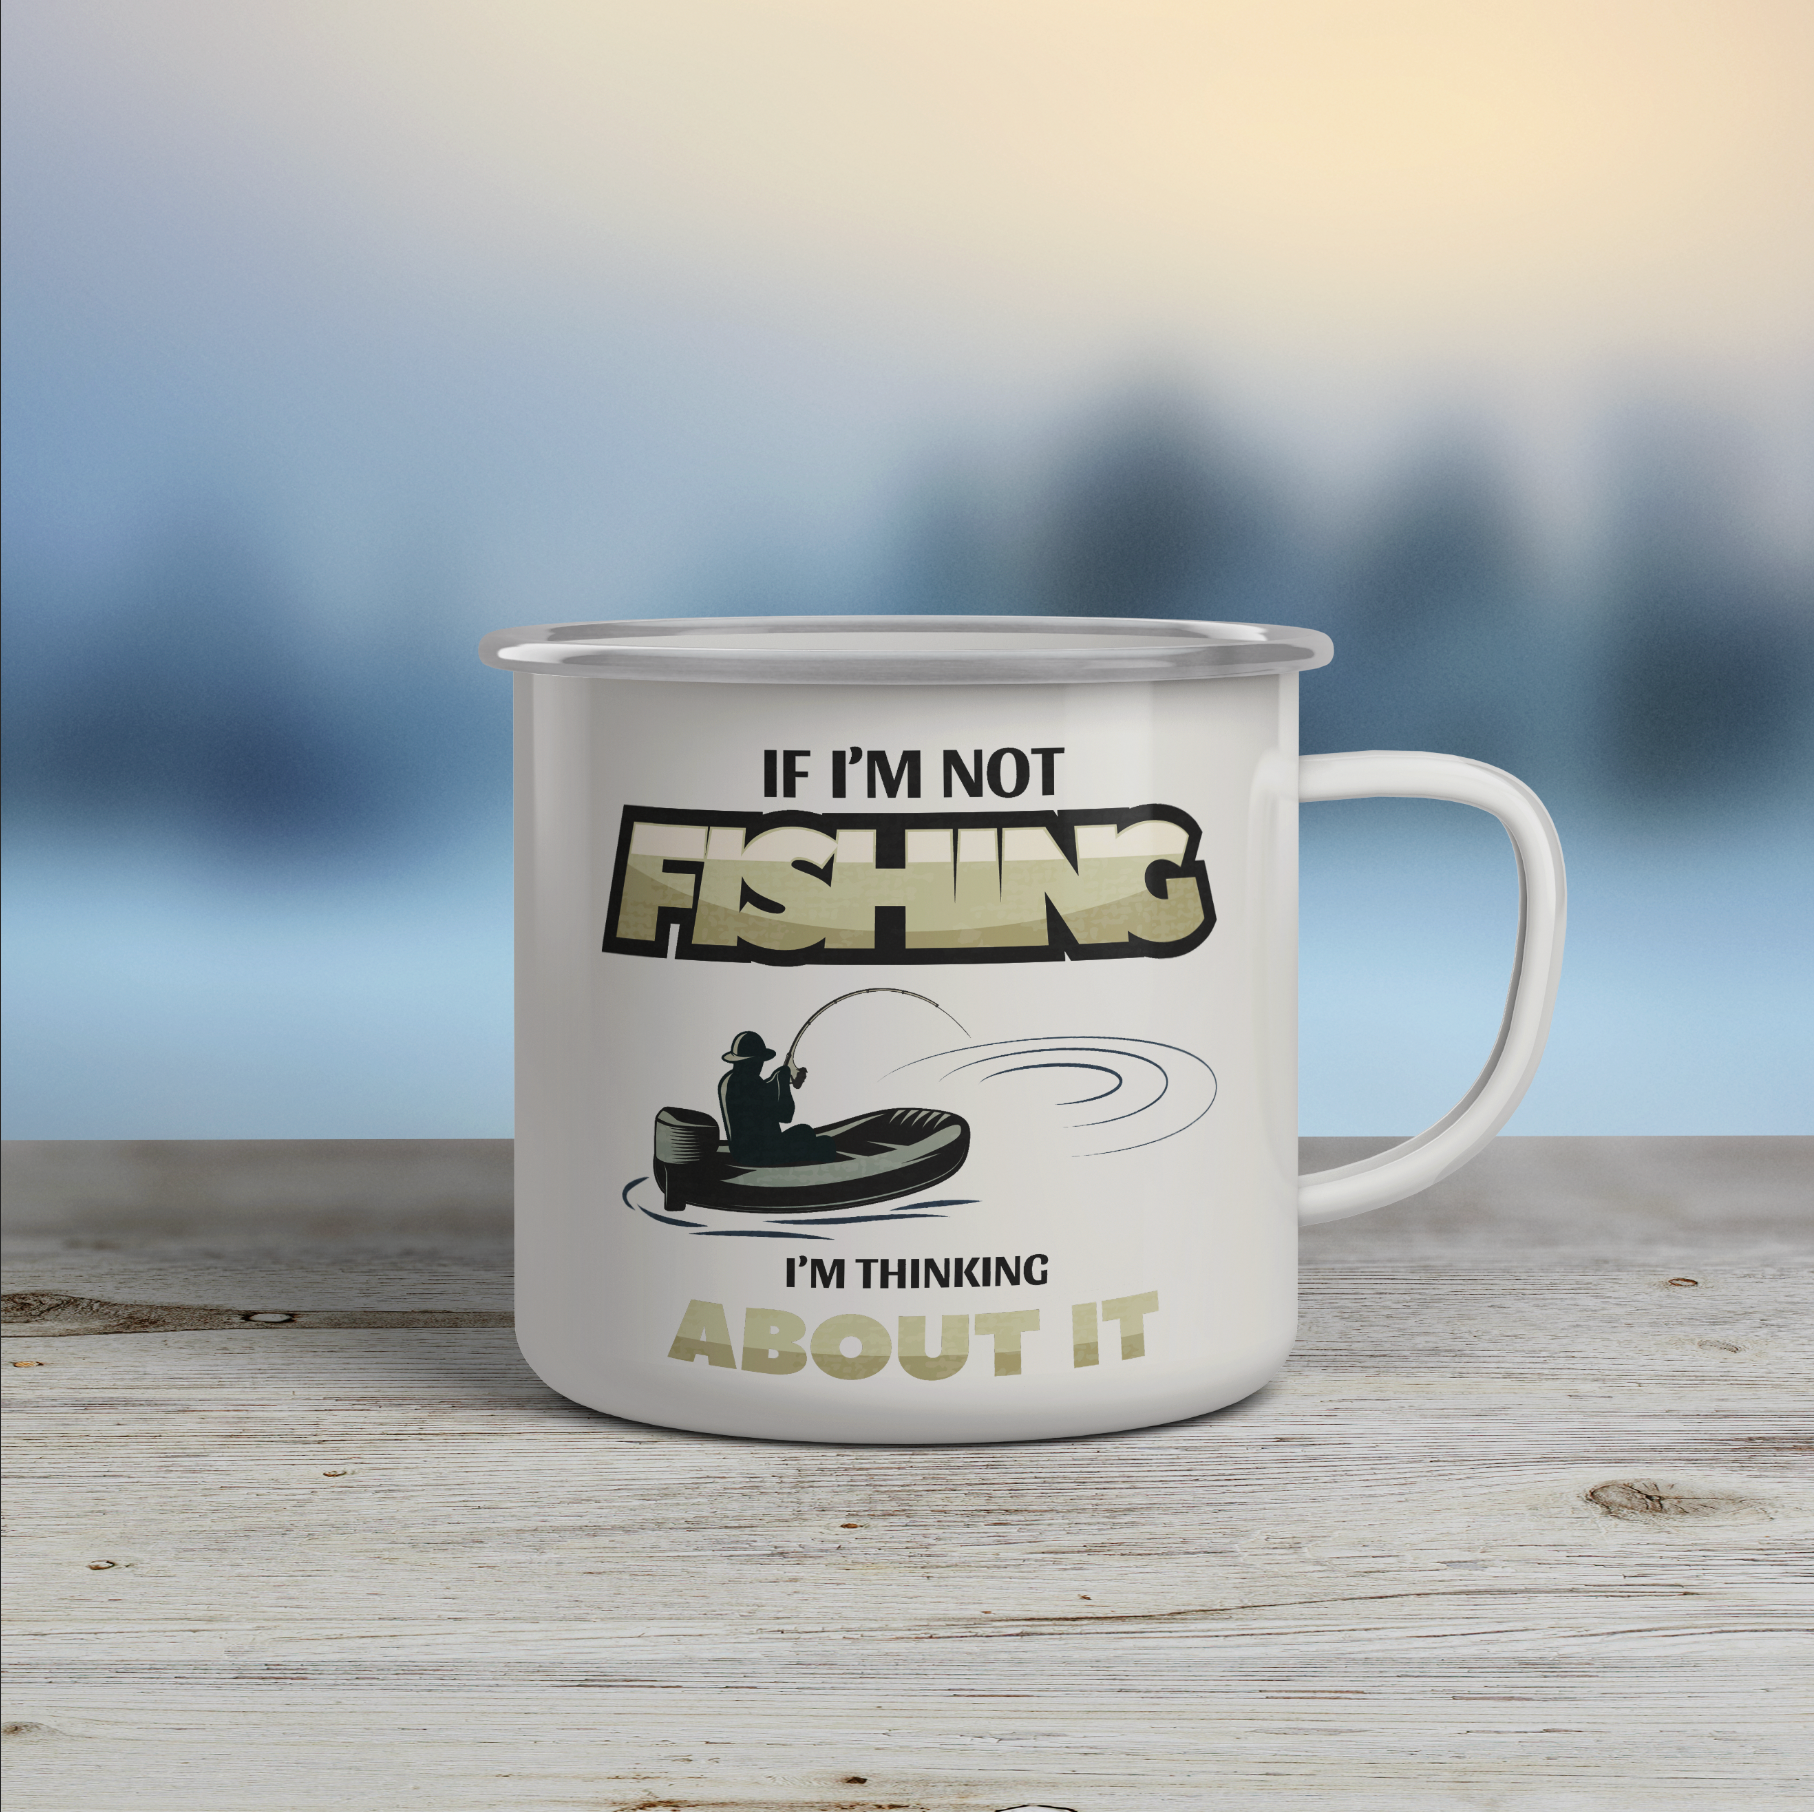 If i'm not fishing - Emaljmugg